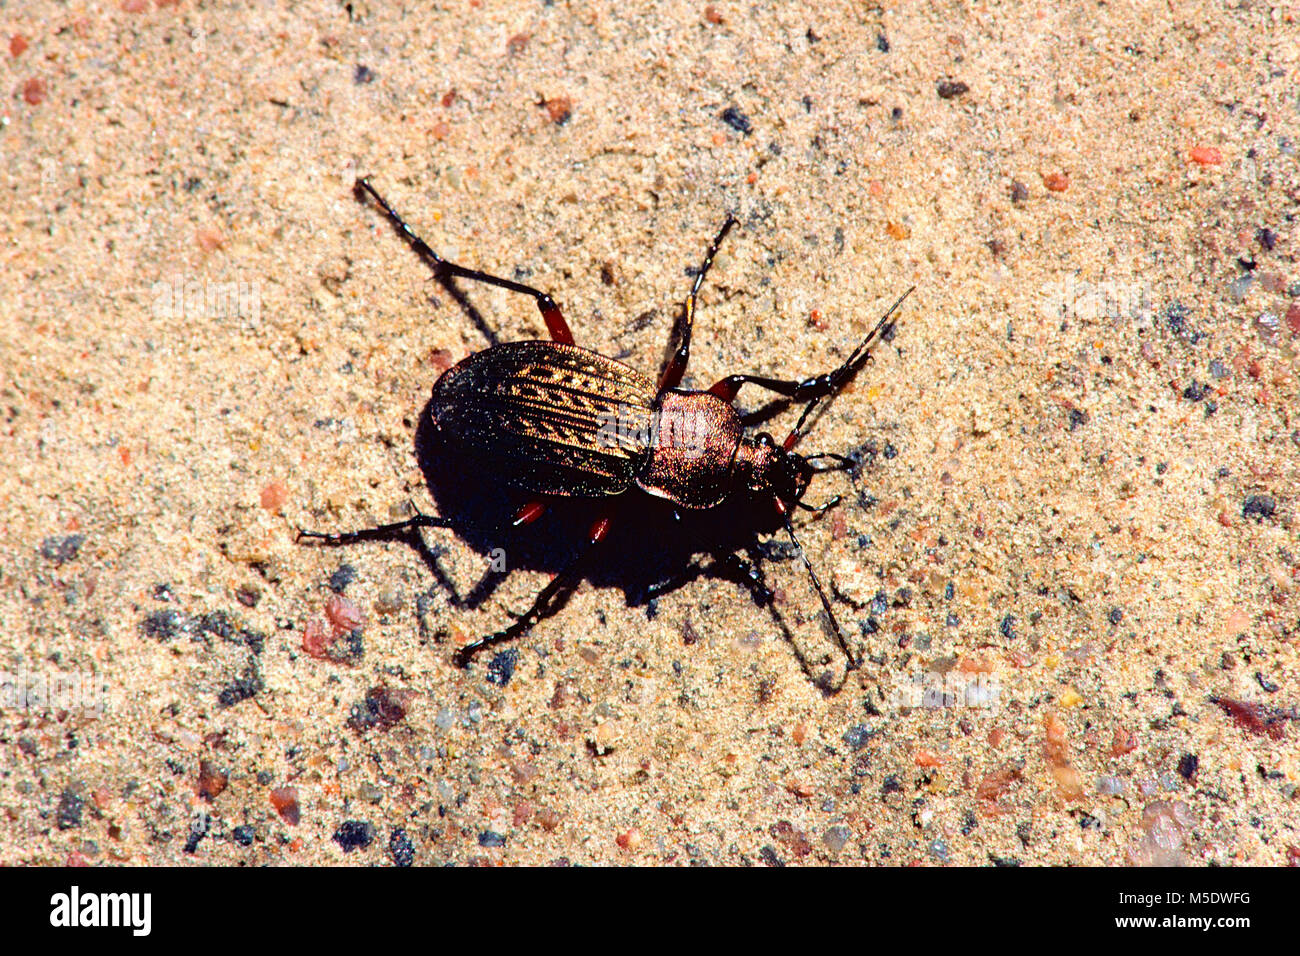 Sausage Ground Beetle, Carabus cancellatus, Carabidae, beetle, ground beetle, insect, animal, Finland Stock Photo